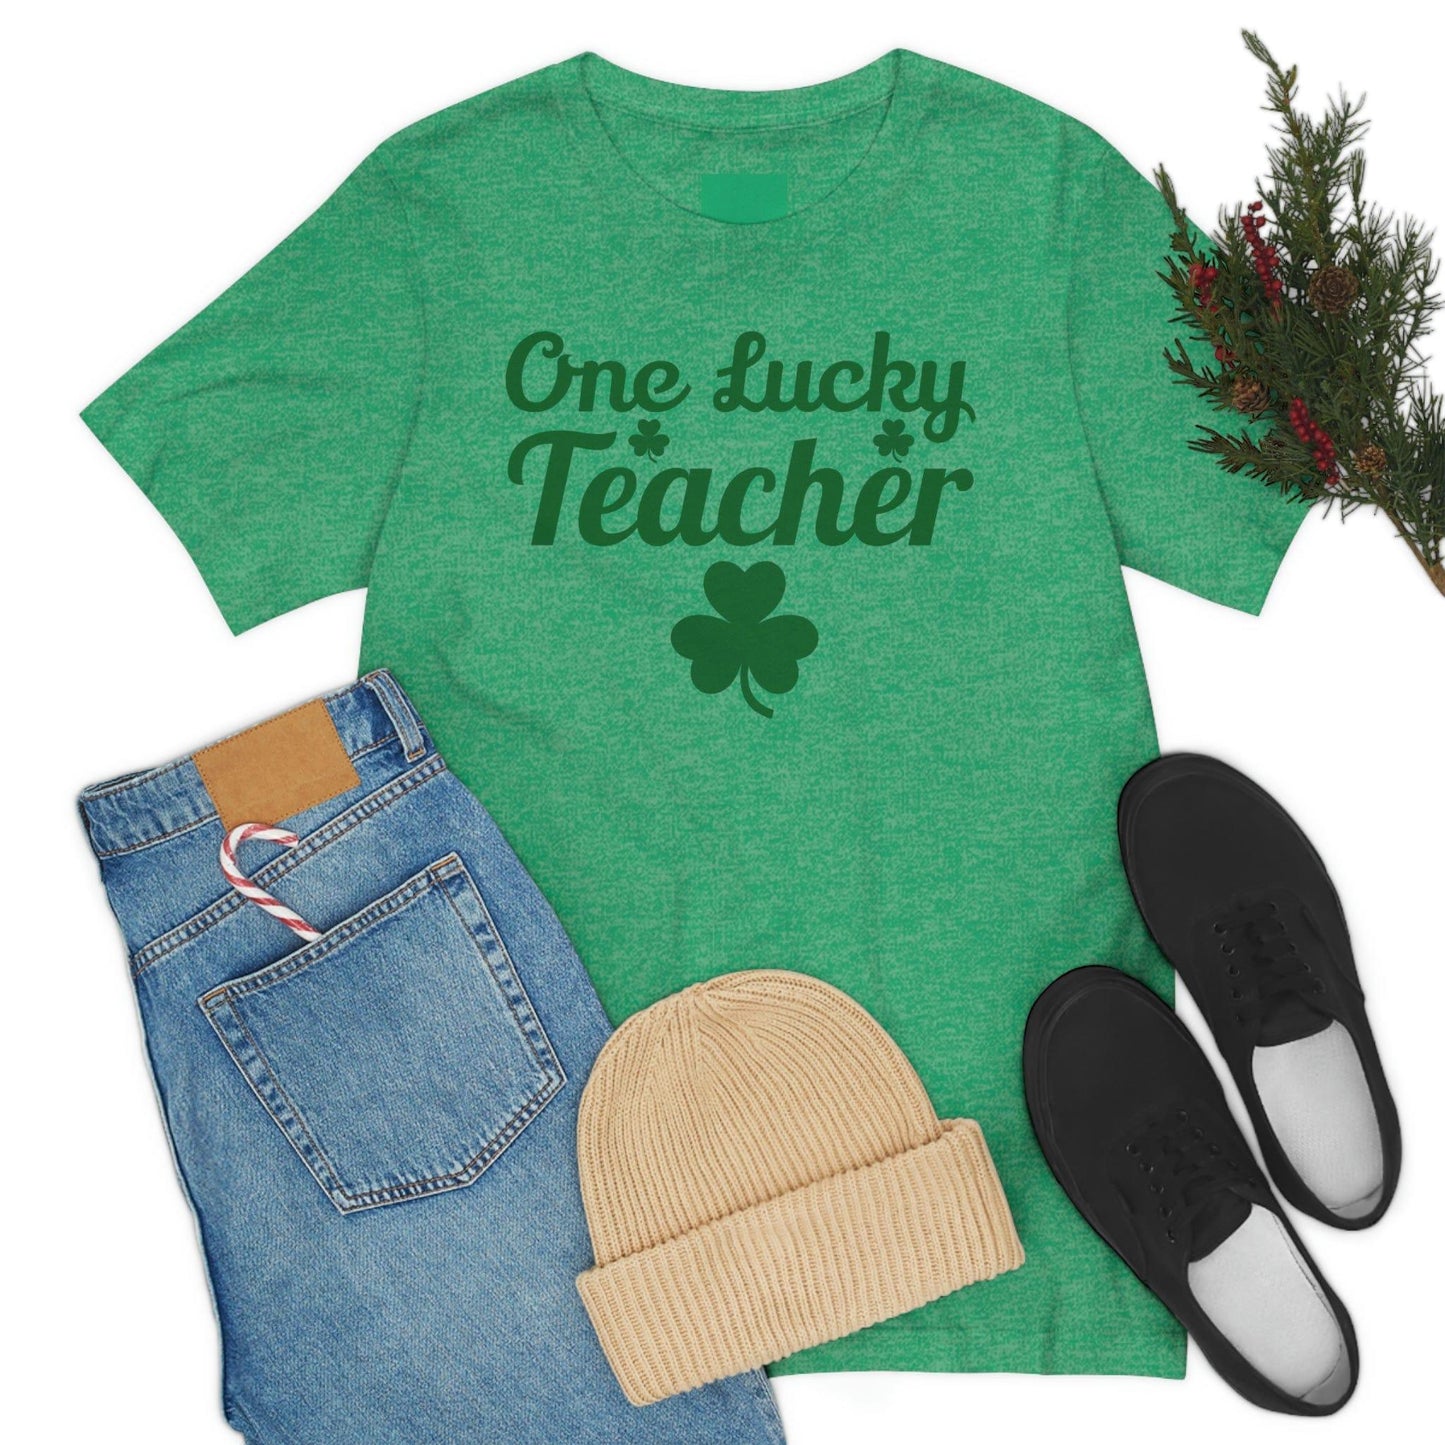 Feeling Lucky Shirt One Lucky Teacher Shirt St Patrick's Day shirt - Funny St Paddy's day Funny Shirt Shamrock shirt shenanigans shirt